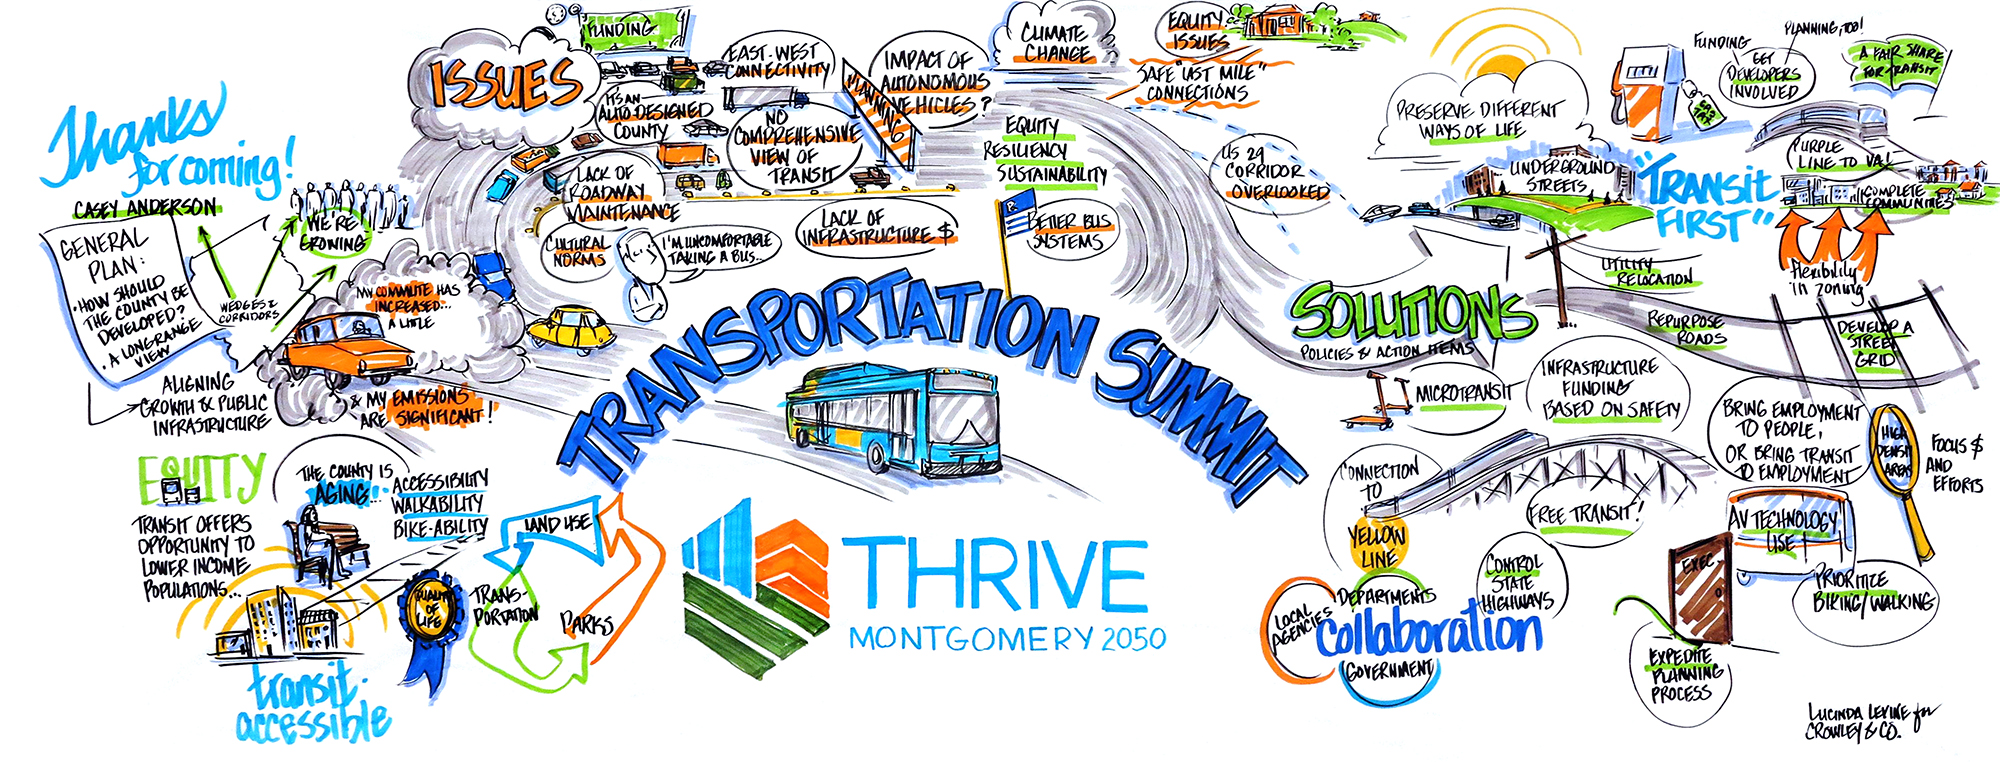 transportation summit graphic reocrding